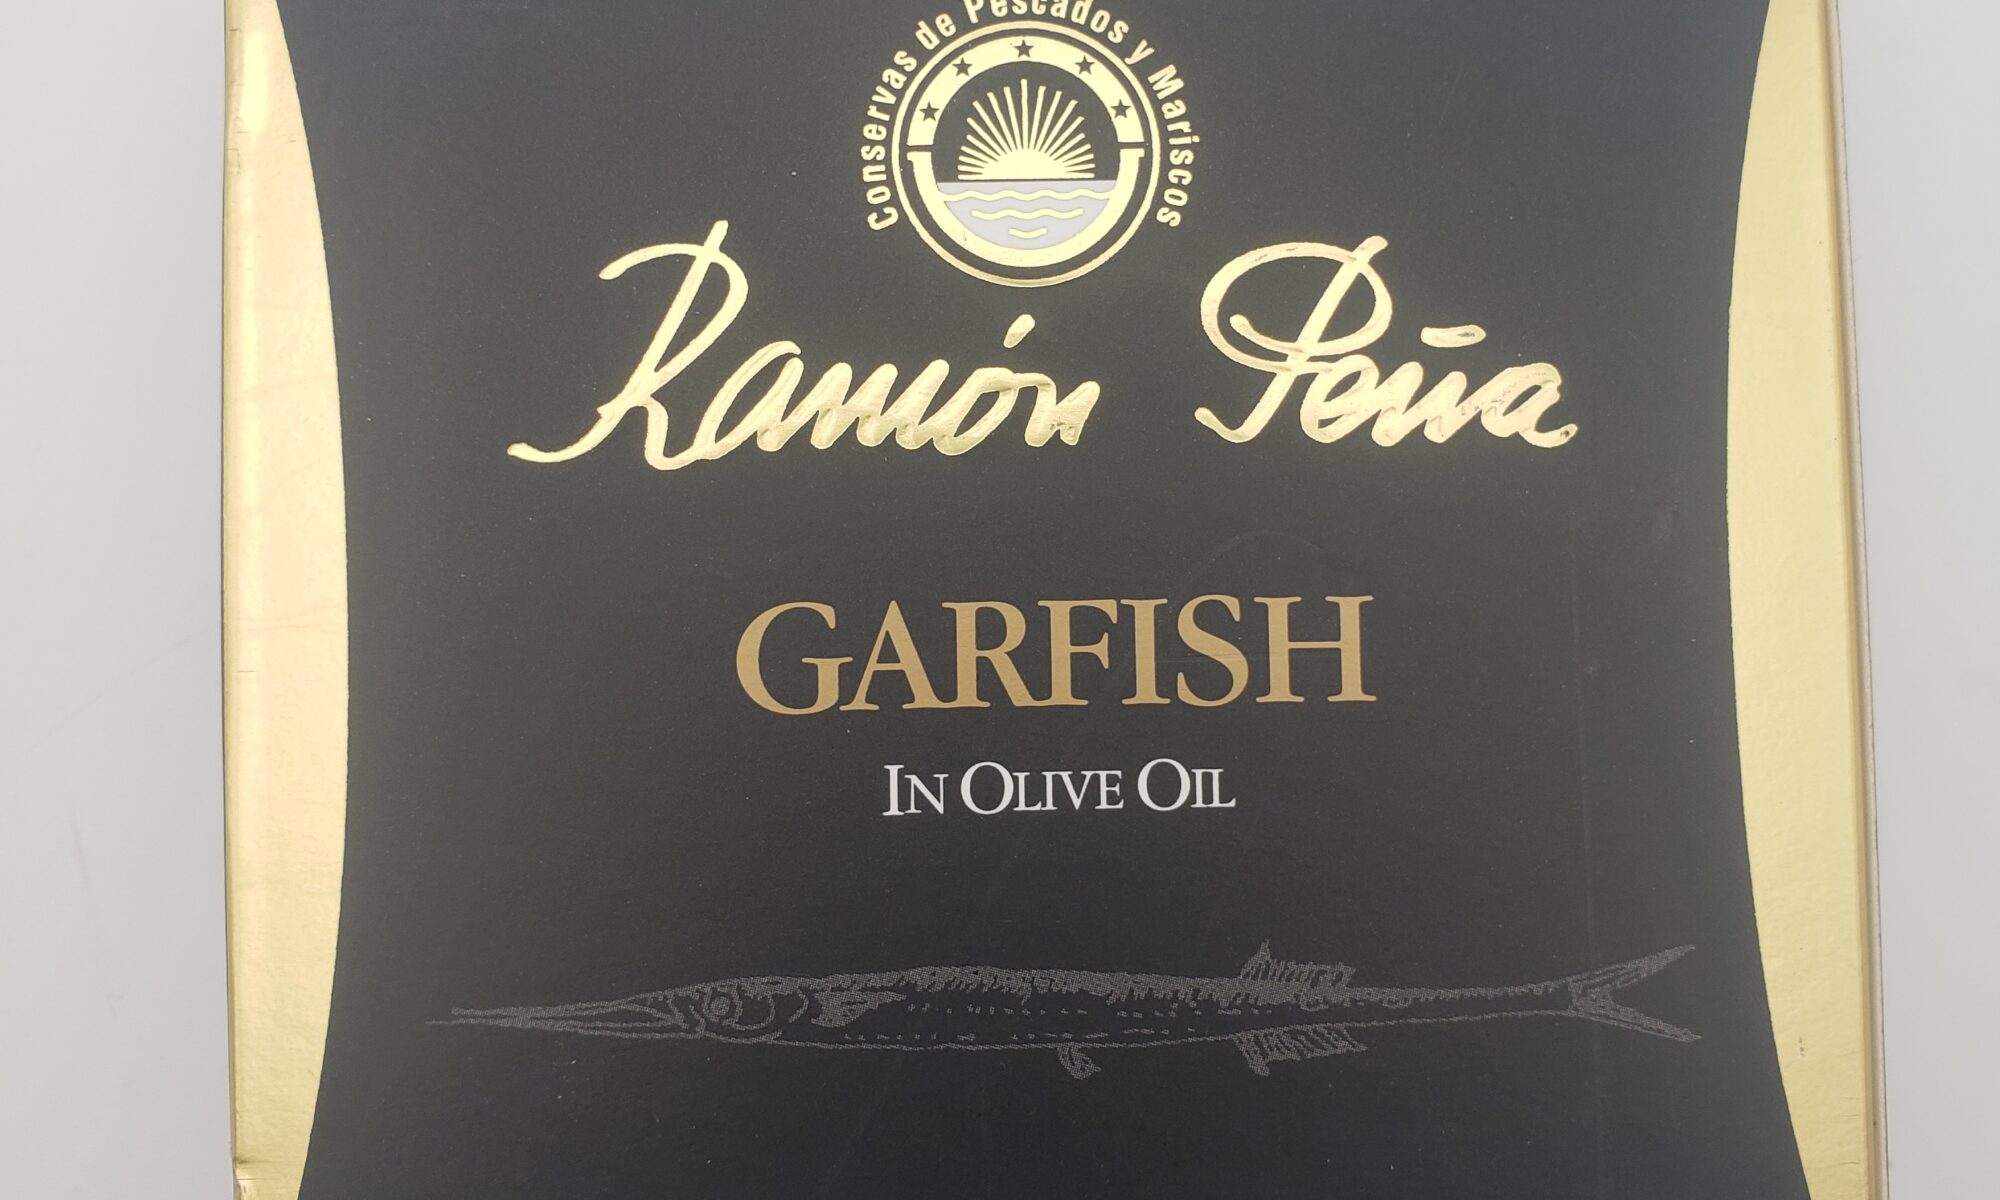 Image of Ramon Pena garfish